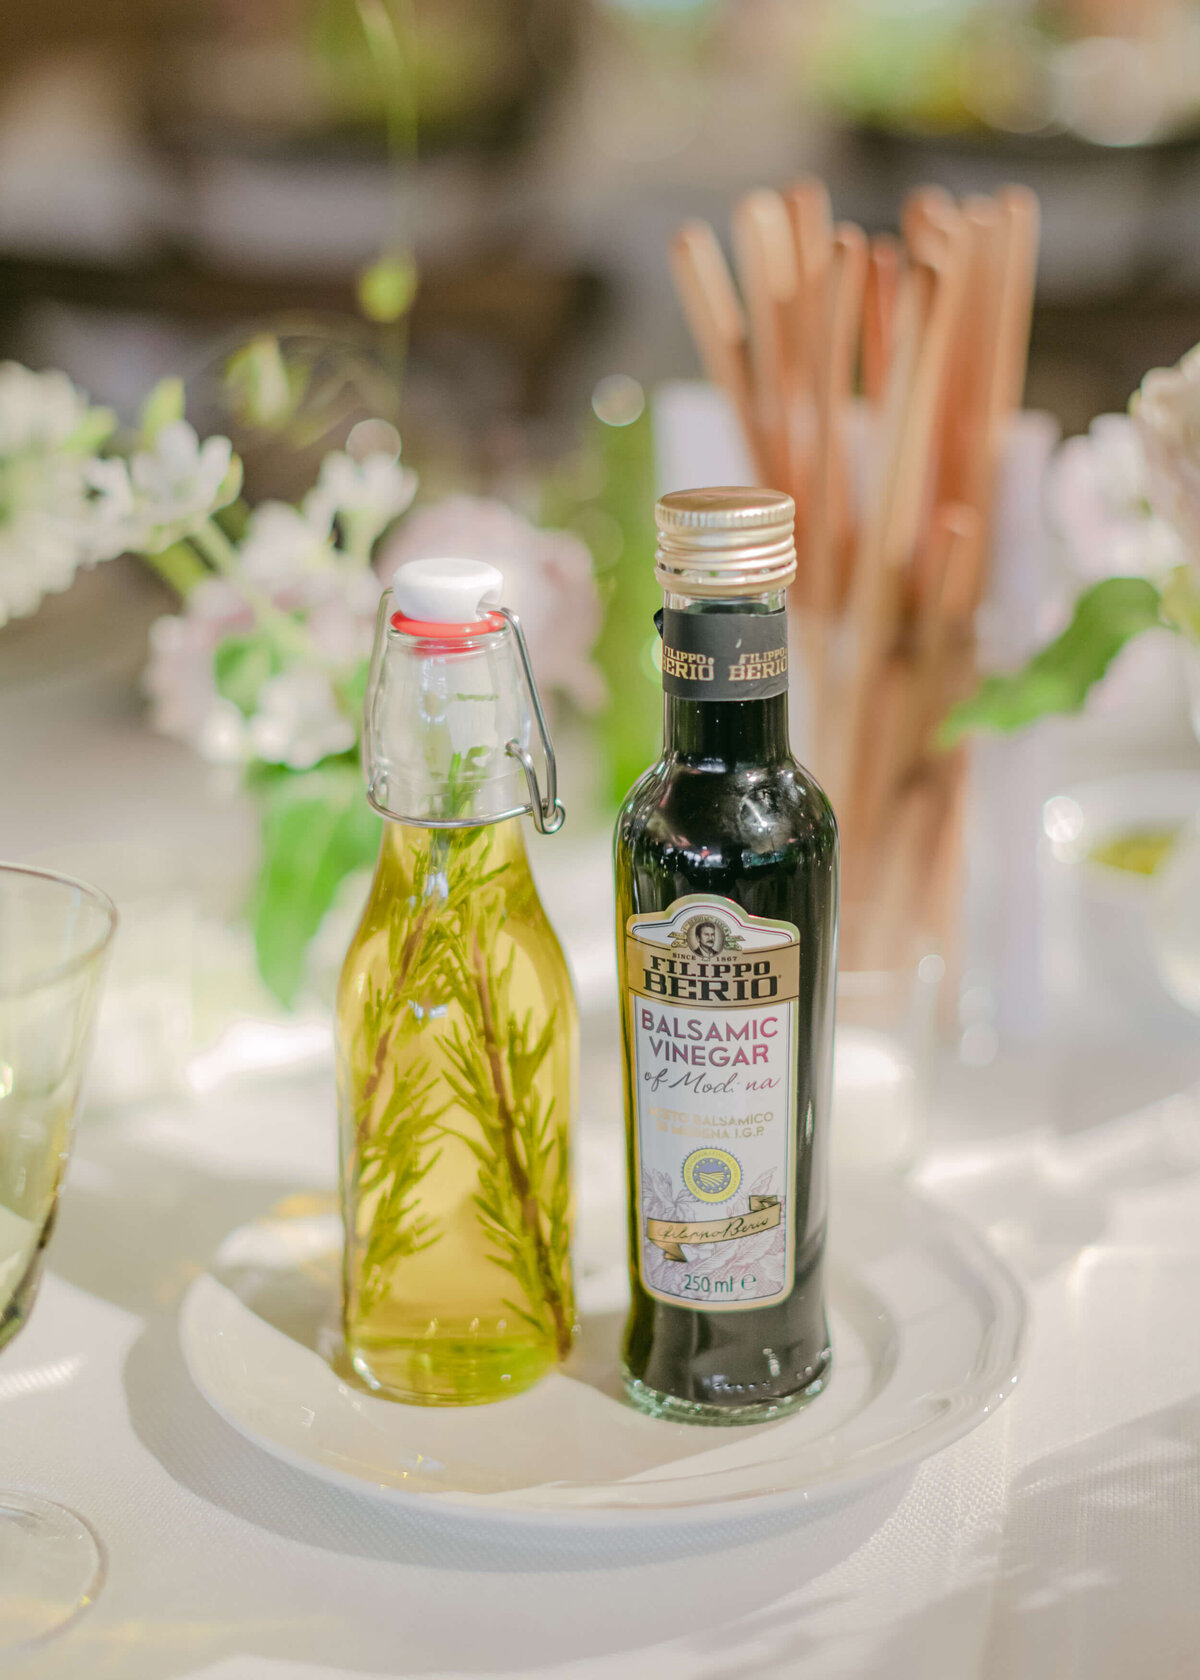 chloe-winstanley-weddings-tablesetting-olive-oil